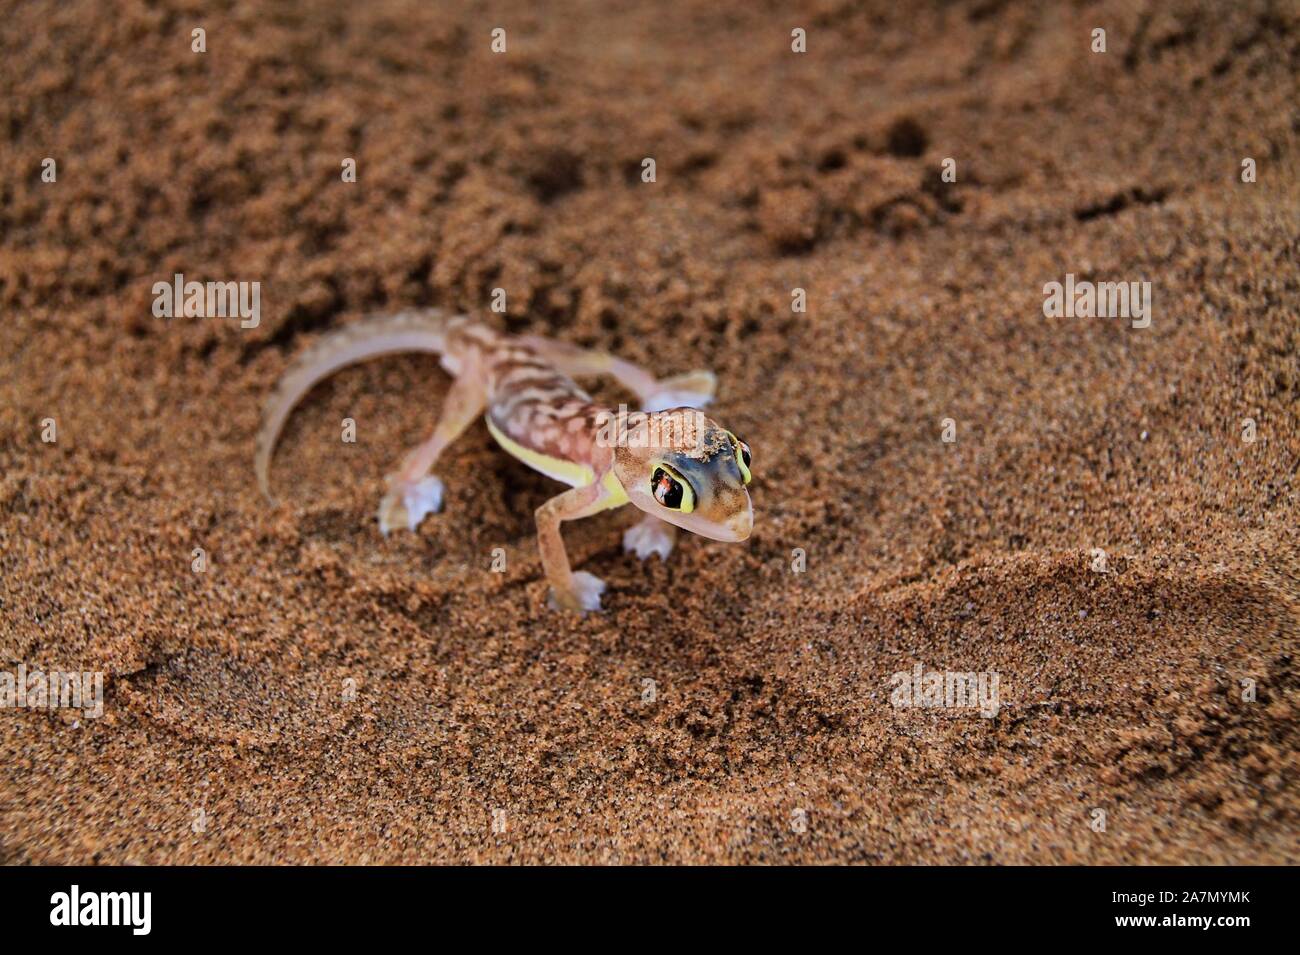 Namibgecko in der Wüste Namibias Stock Photo